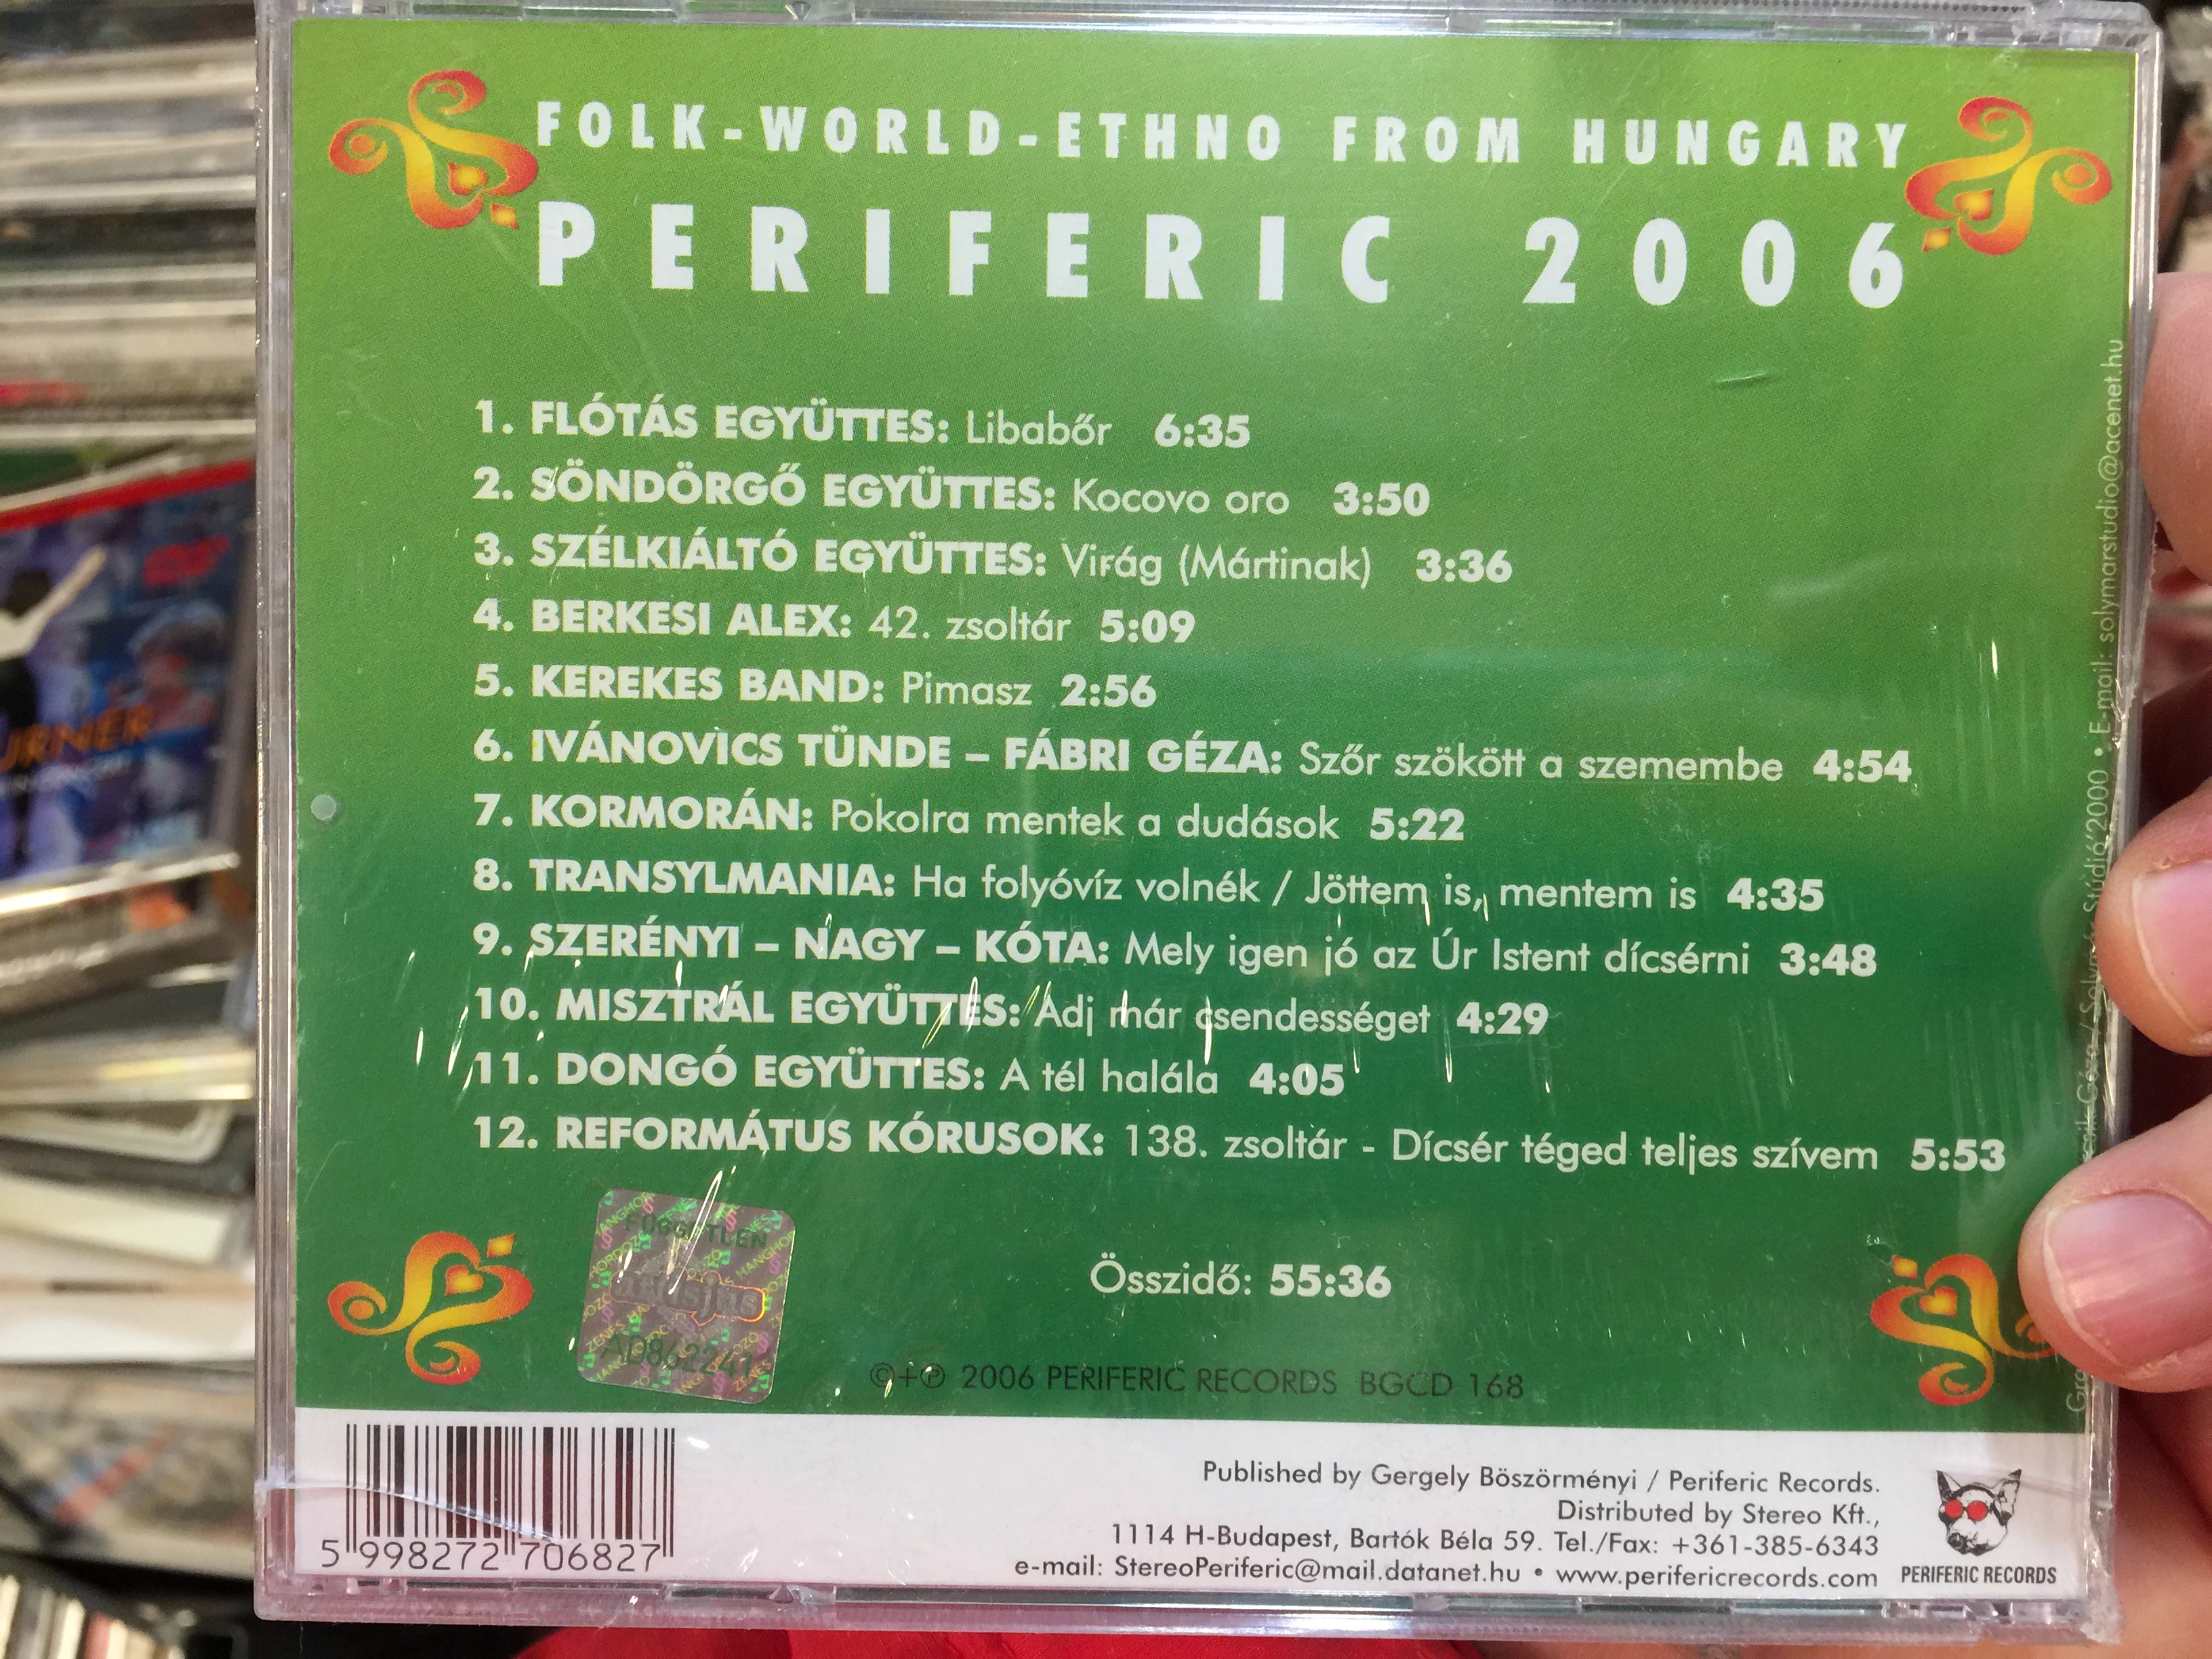 periferic-2006-folk-world-ethno-from-hungary-periferic-records-audio-cd-2006-bgcd-168-2-.jpg